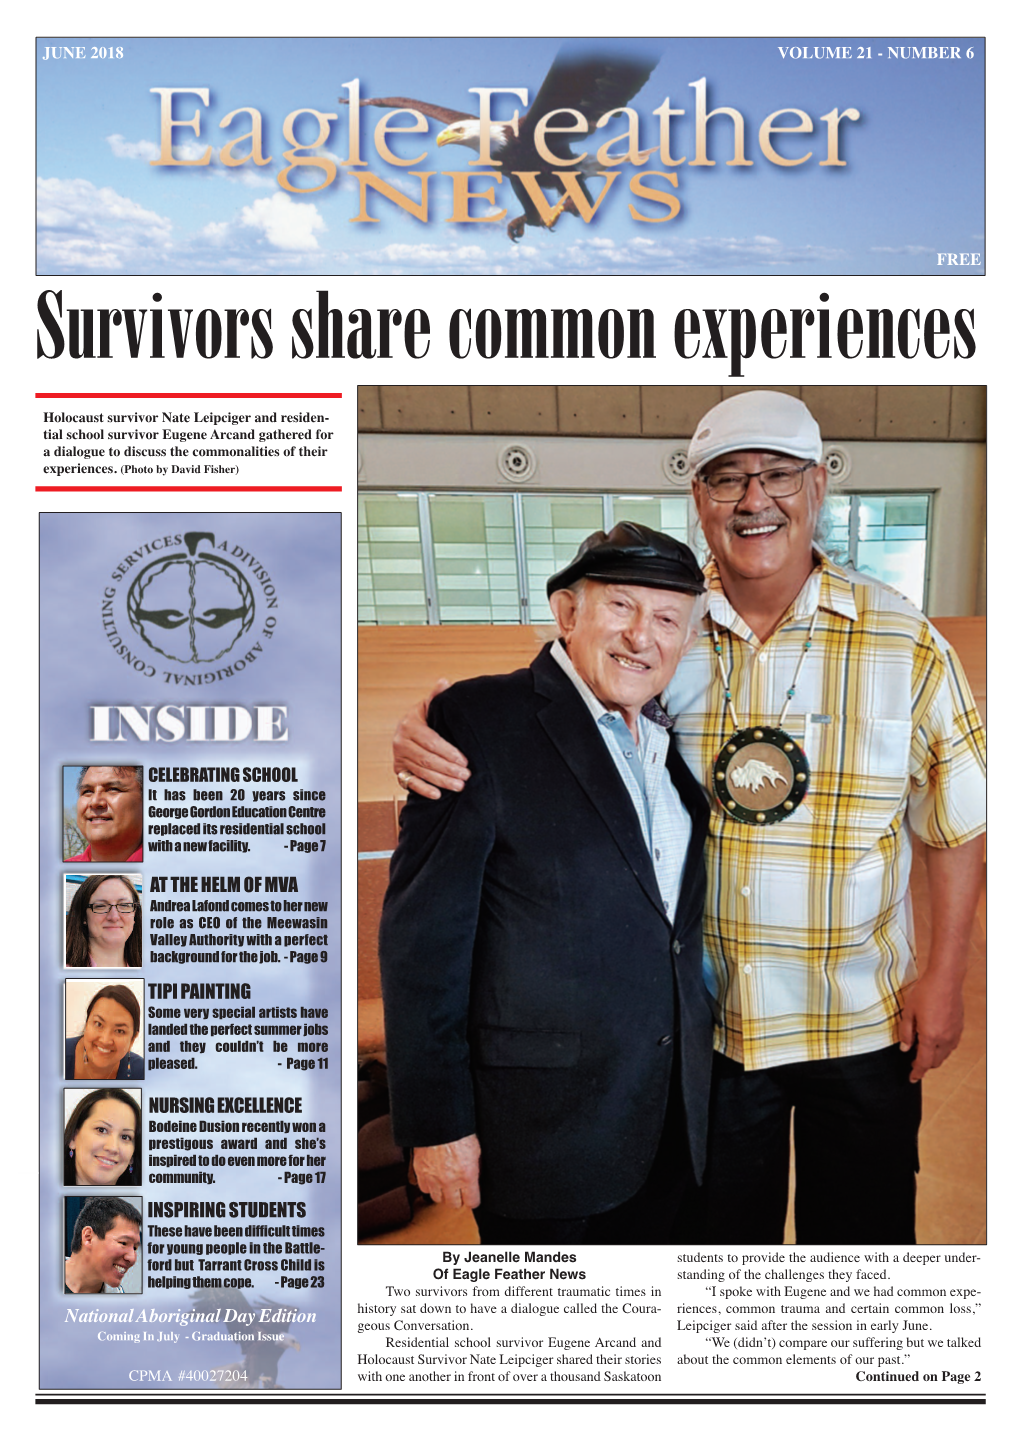 Survivors Share Common Experiences